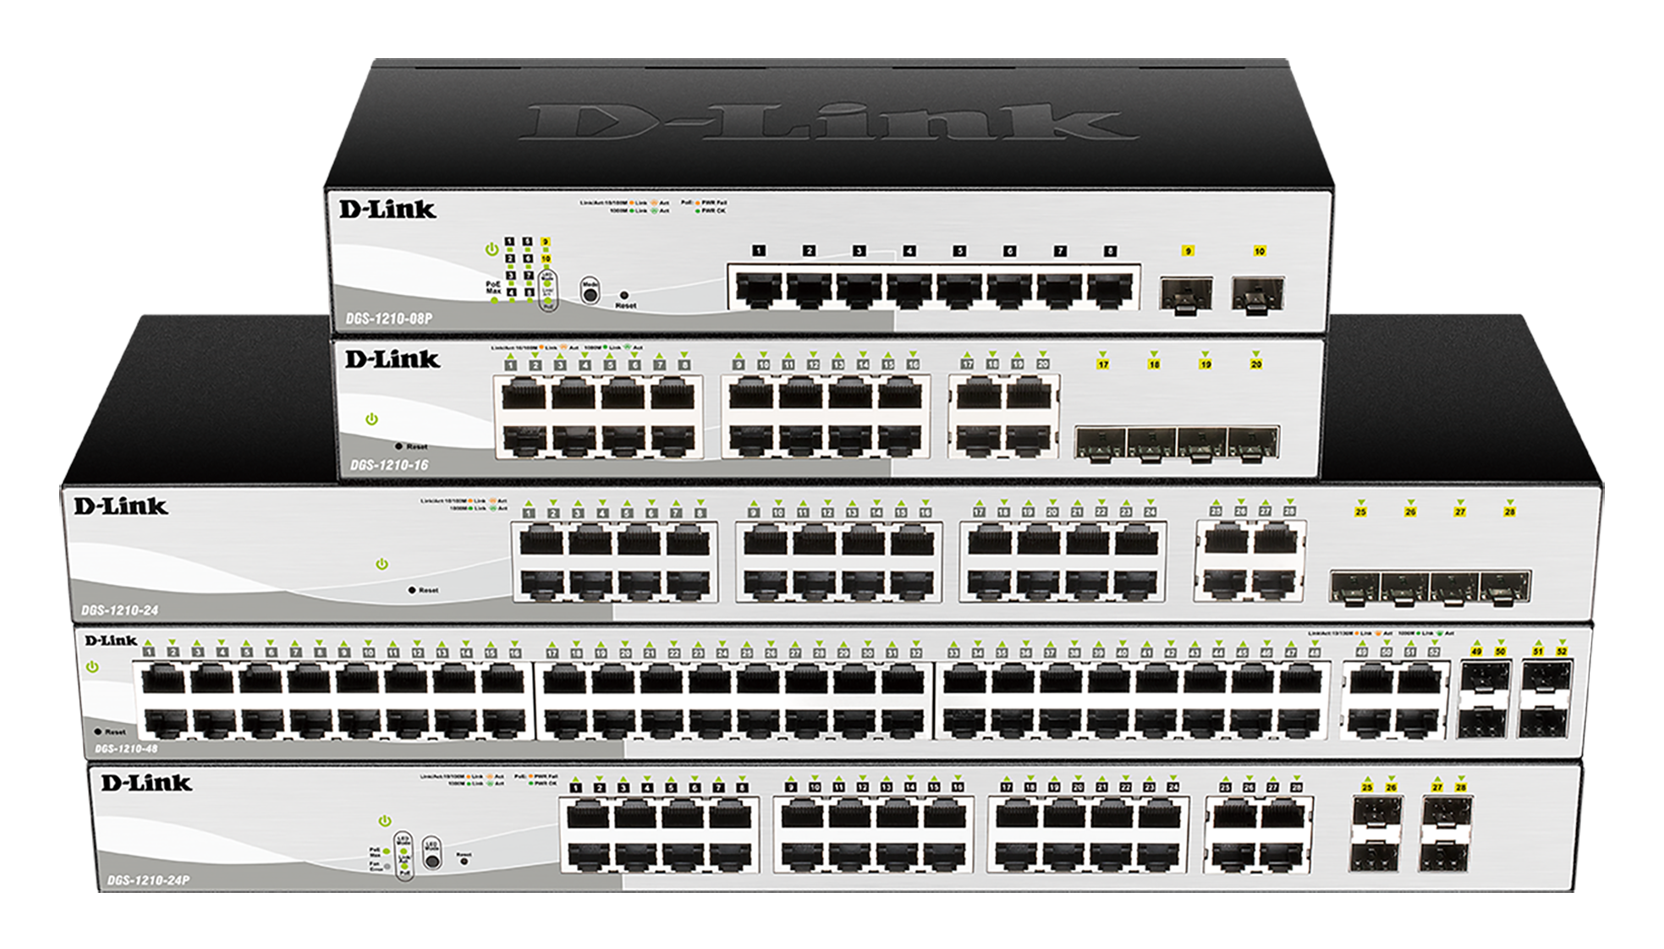 D-Link DGS-1210-24 Gigabit Smart Managed Switch